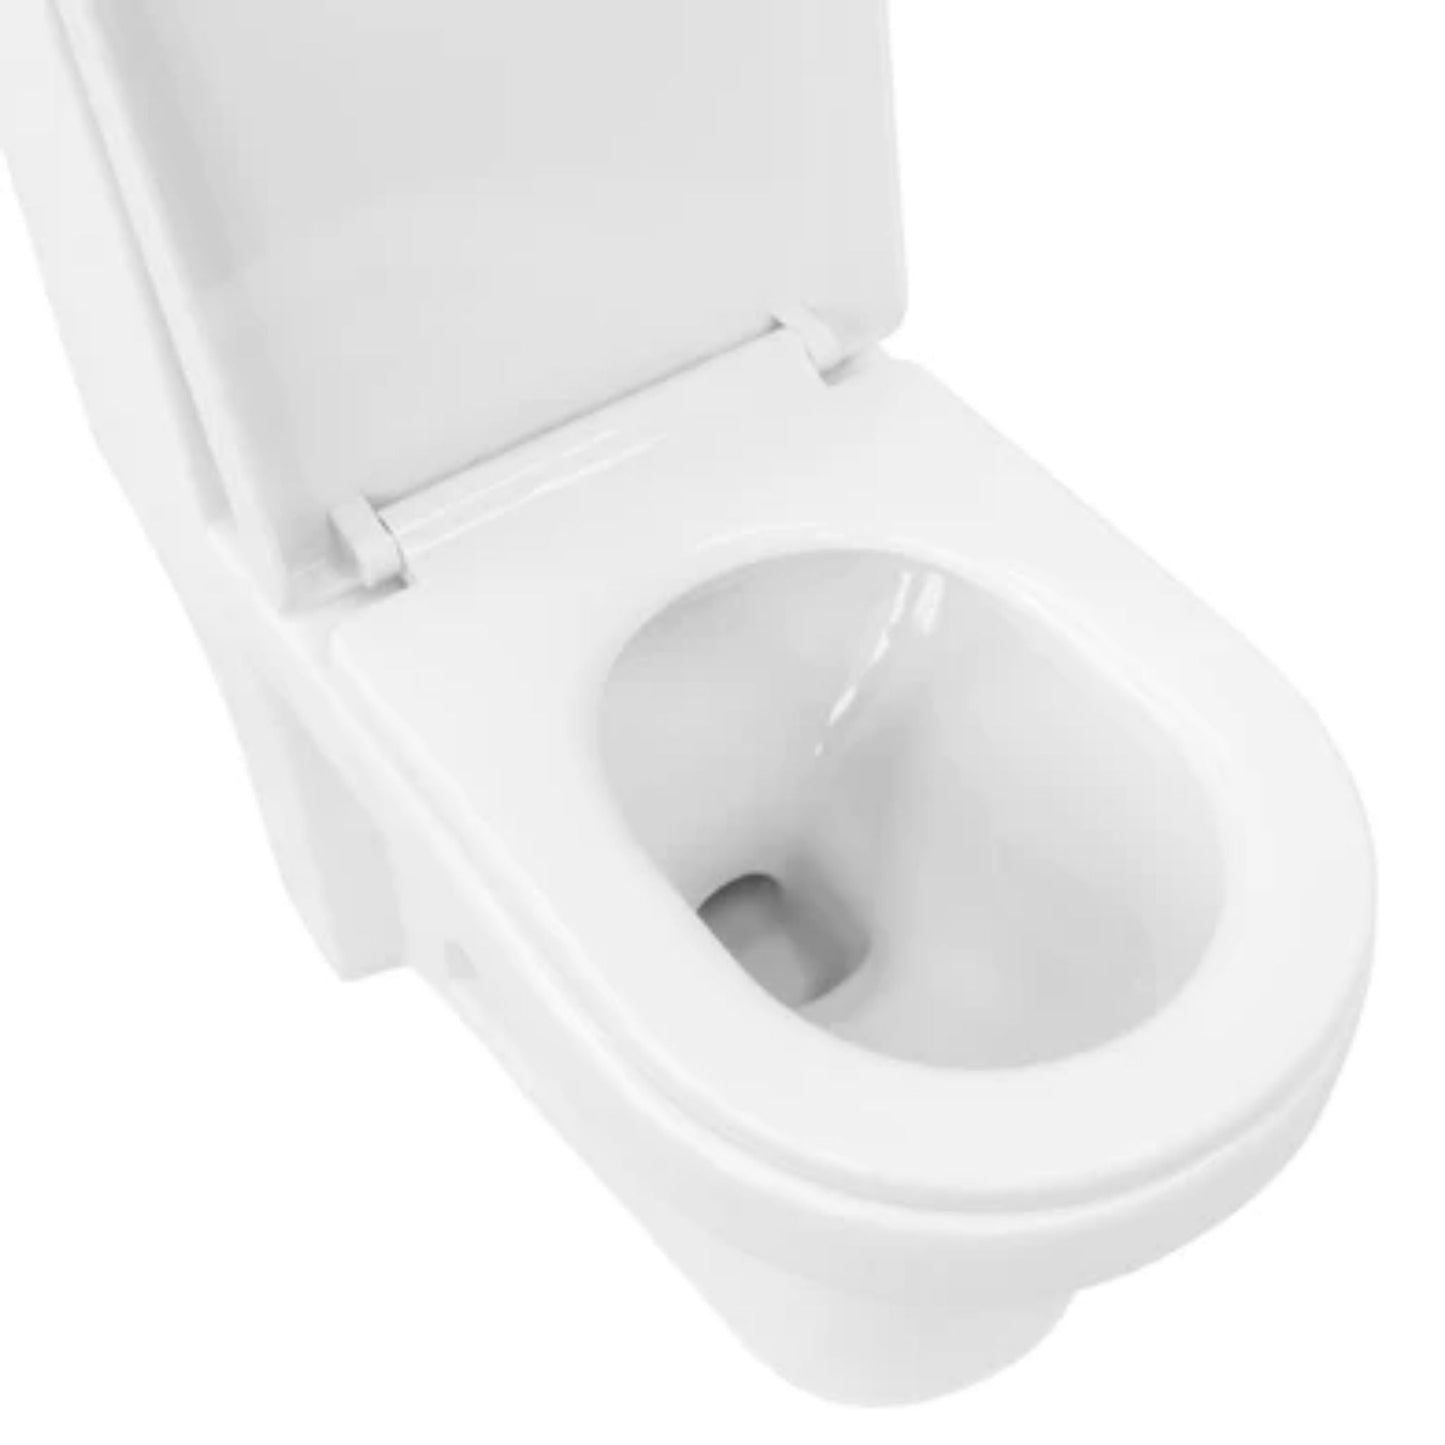 LessCare Single Flush One Piece Modern Toilet - LT9